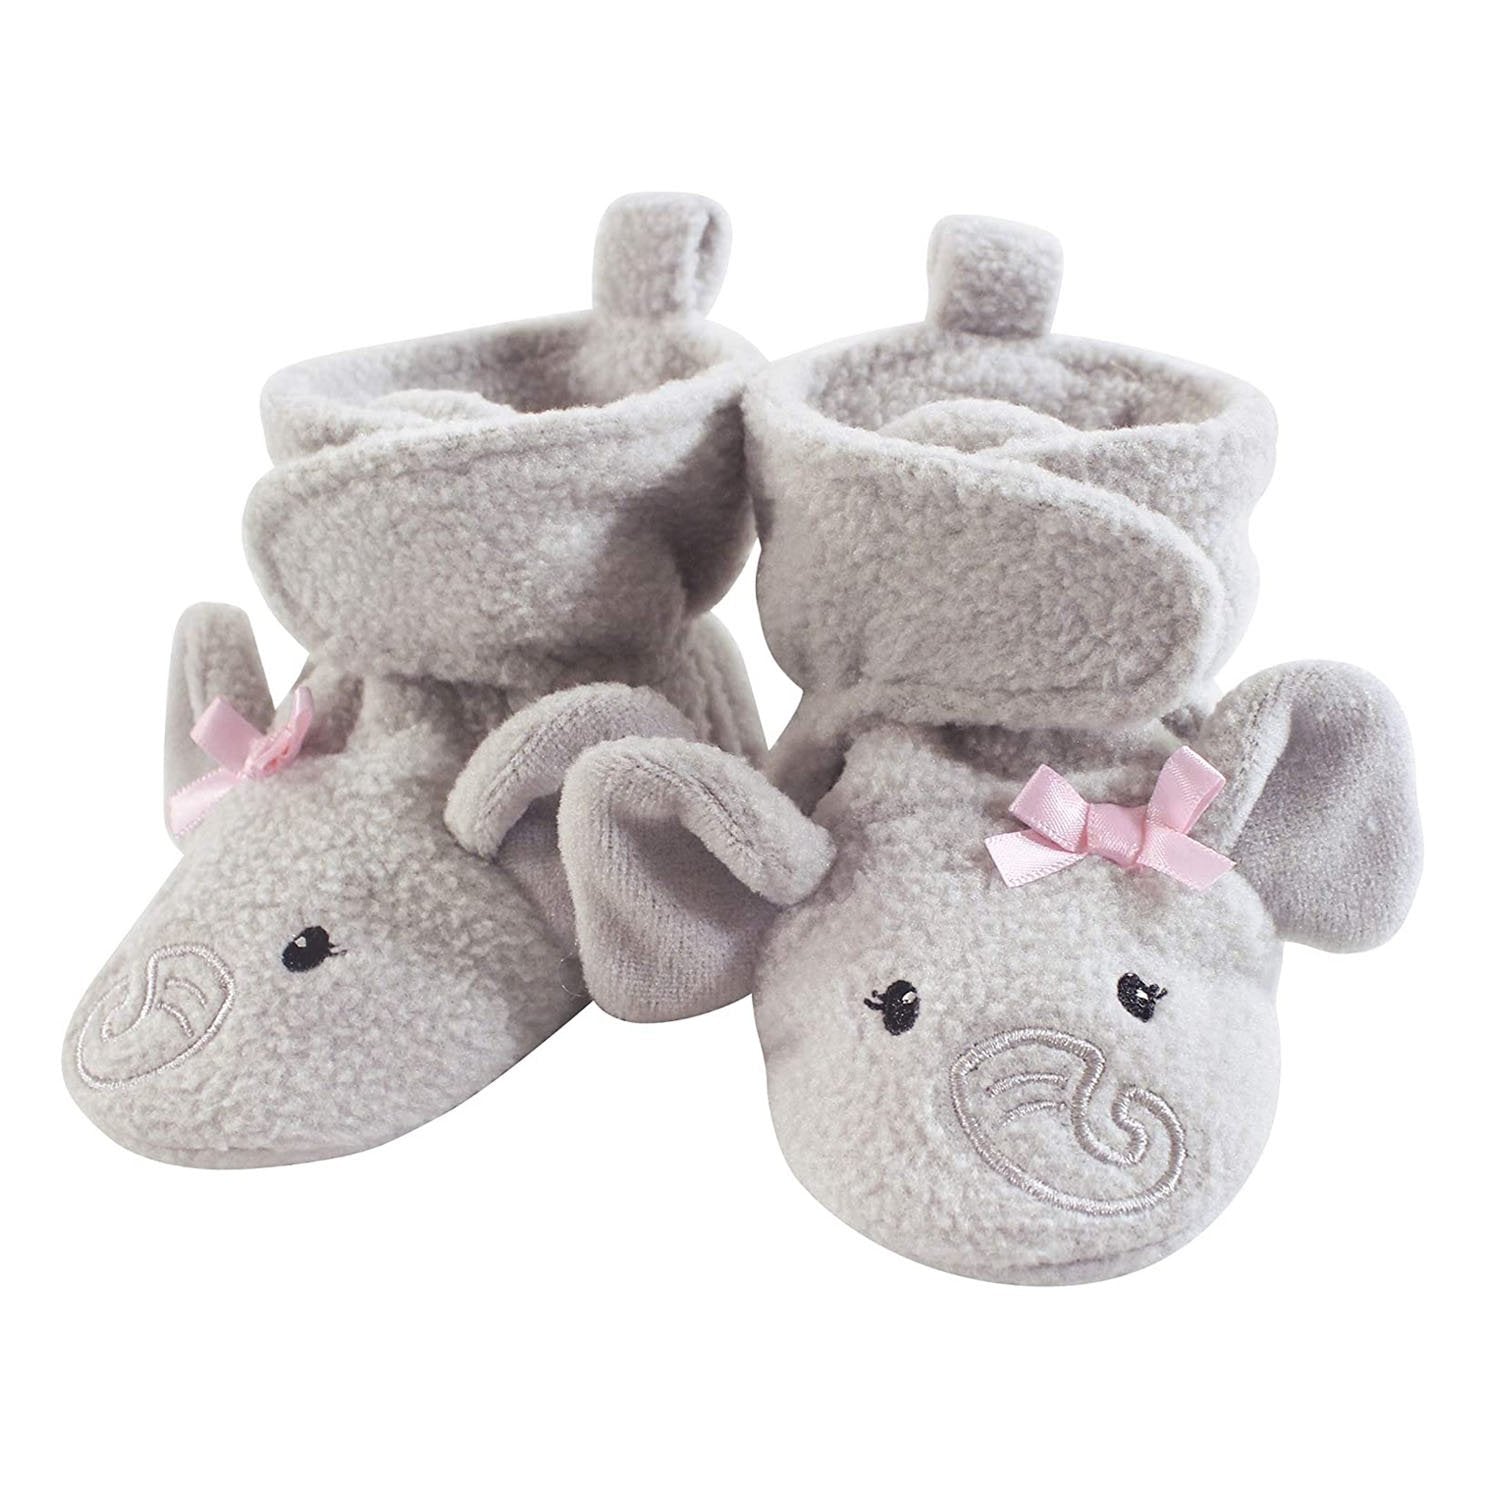 Precioso elefante 3D impreso cálido botas de felpa zapatos de bebé